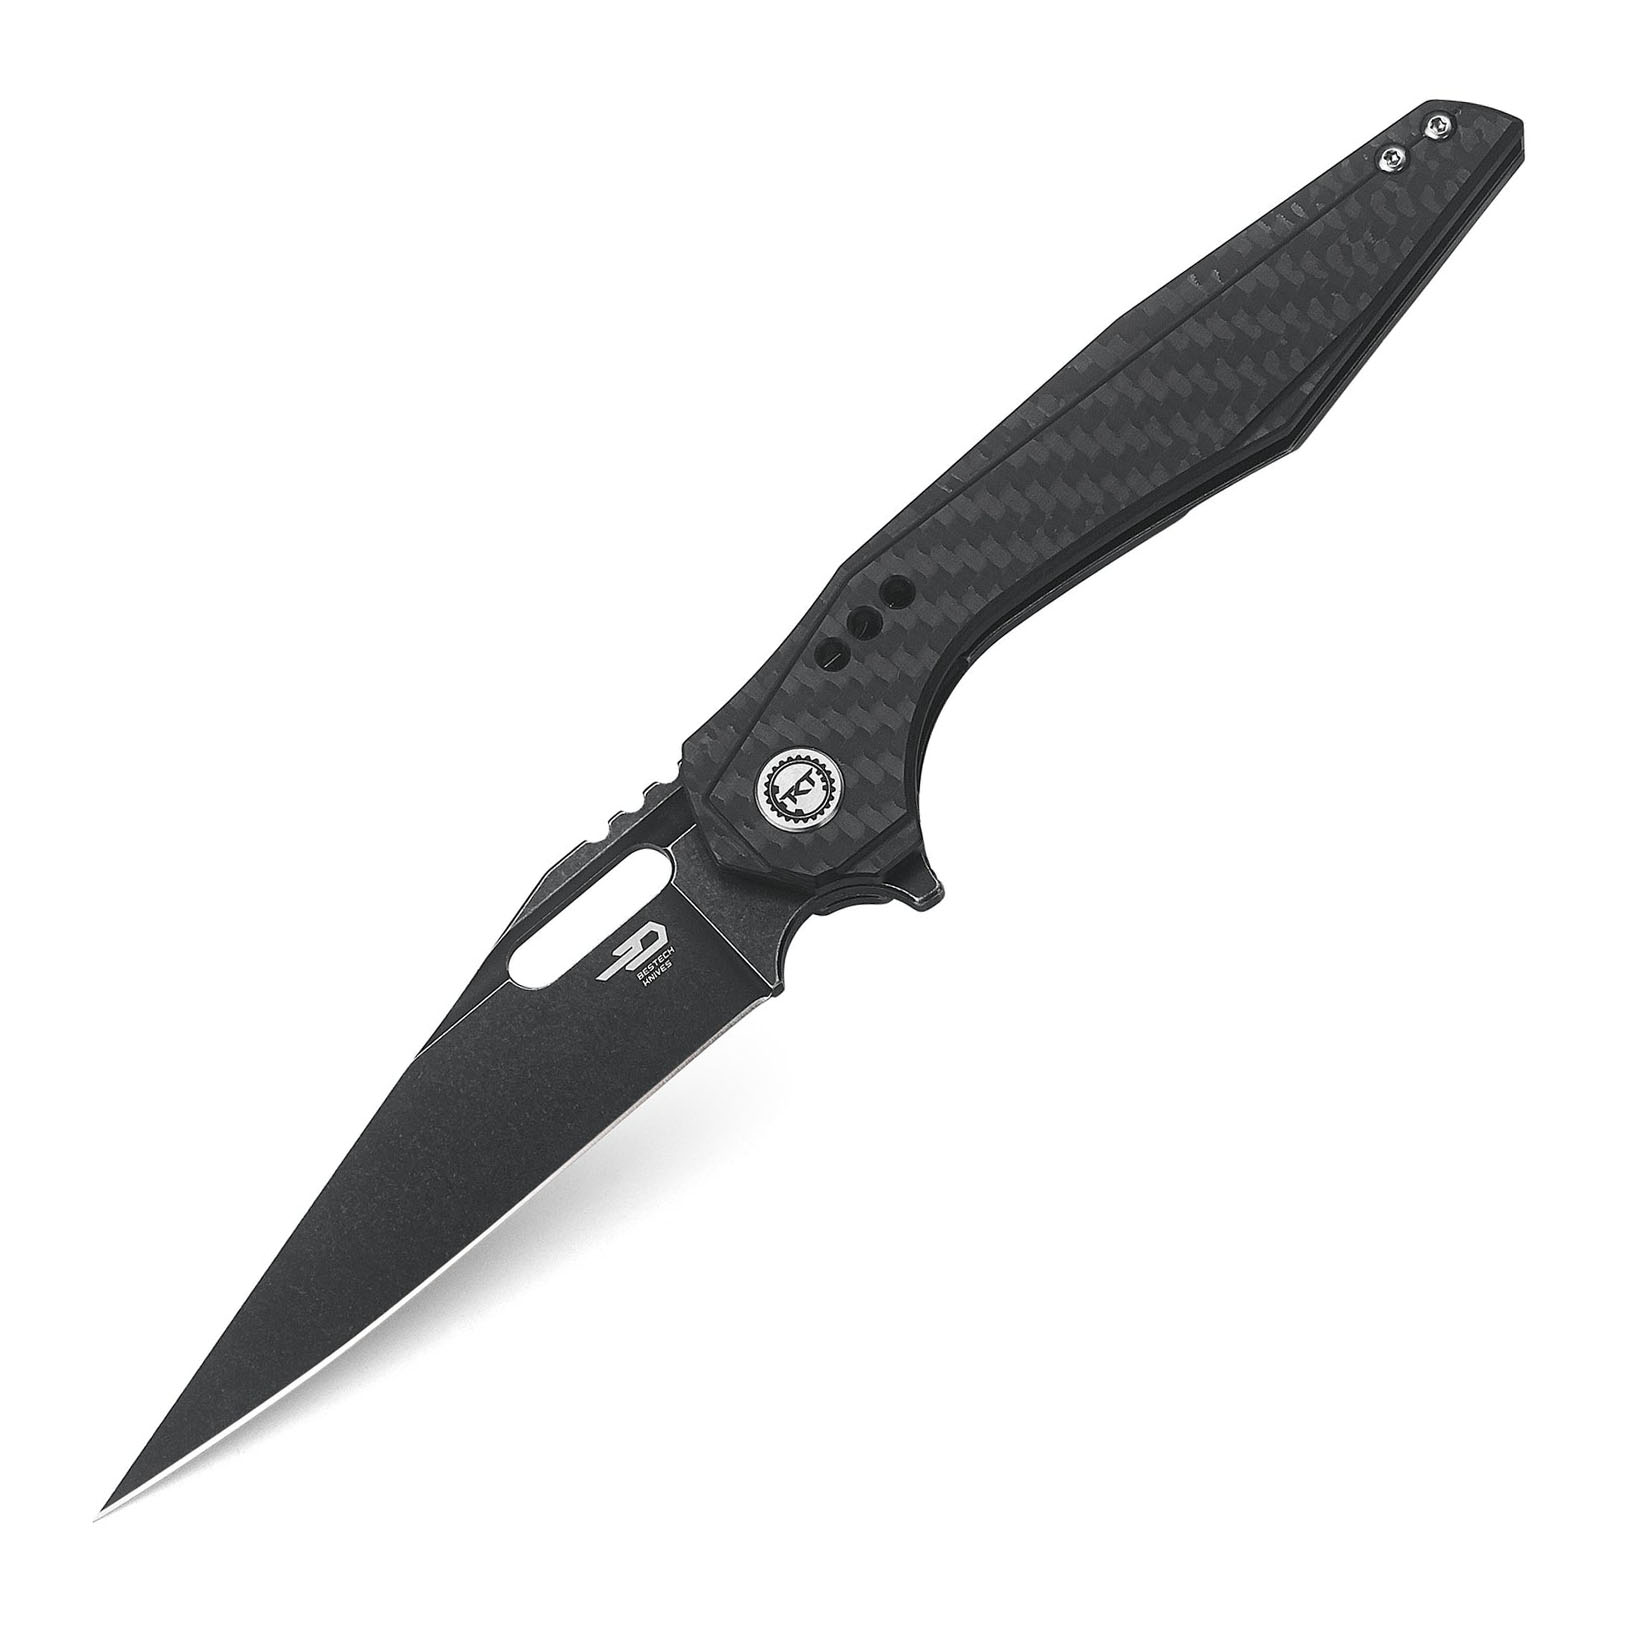 Bestech Knives Malware S35VN钢 碳纤维+钛合金柄 BT1902C 1580